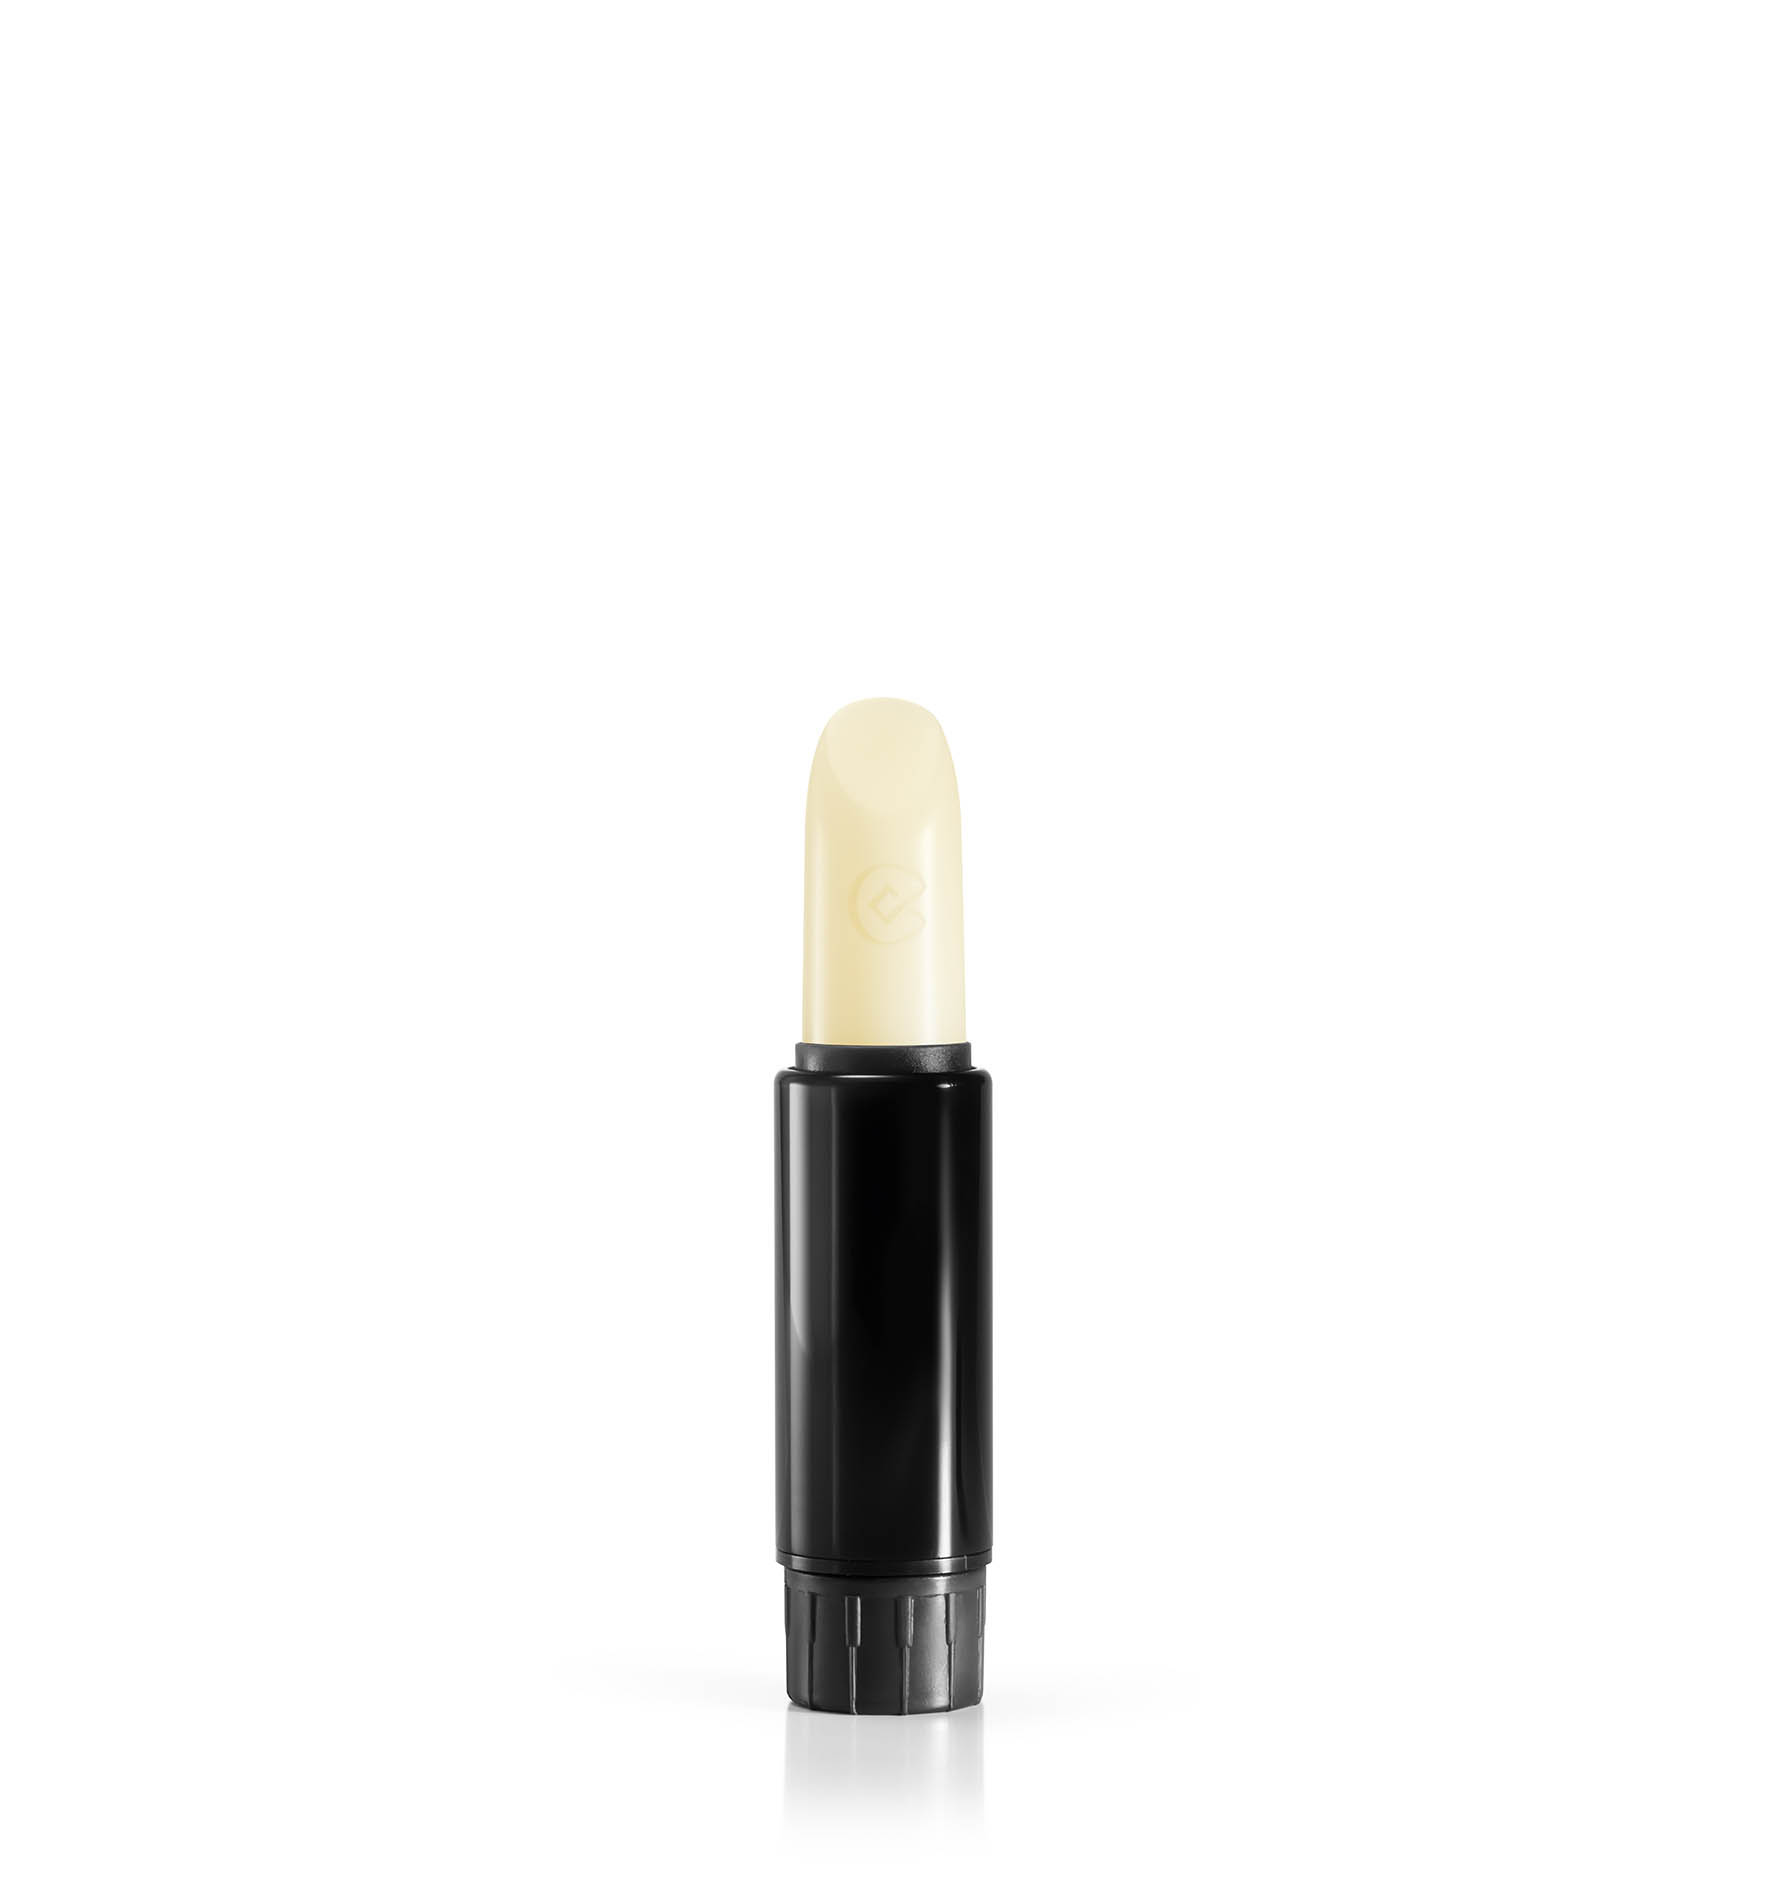 PURO BALM REFILL - Lipsticks | Collistar - Shop Online Ufficiale